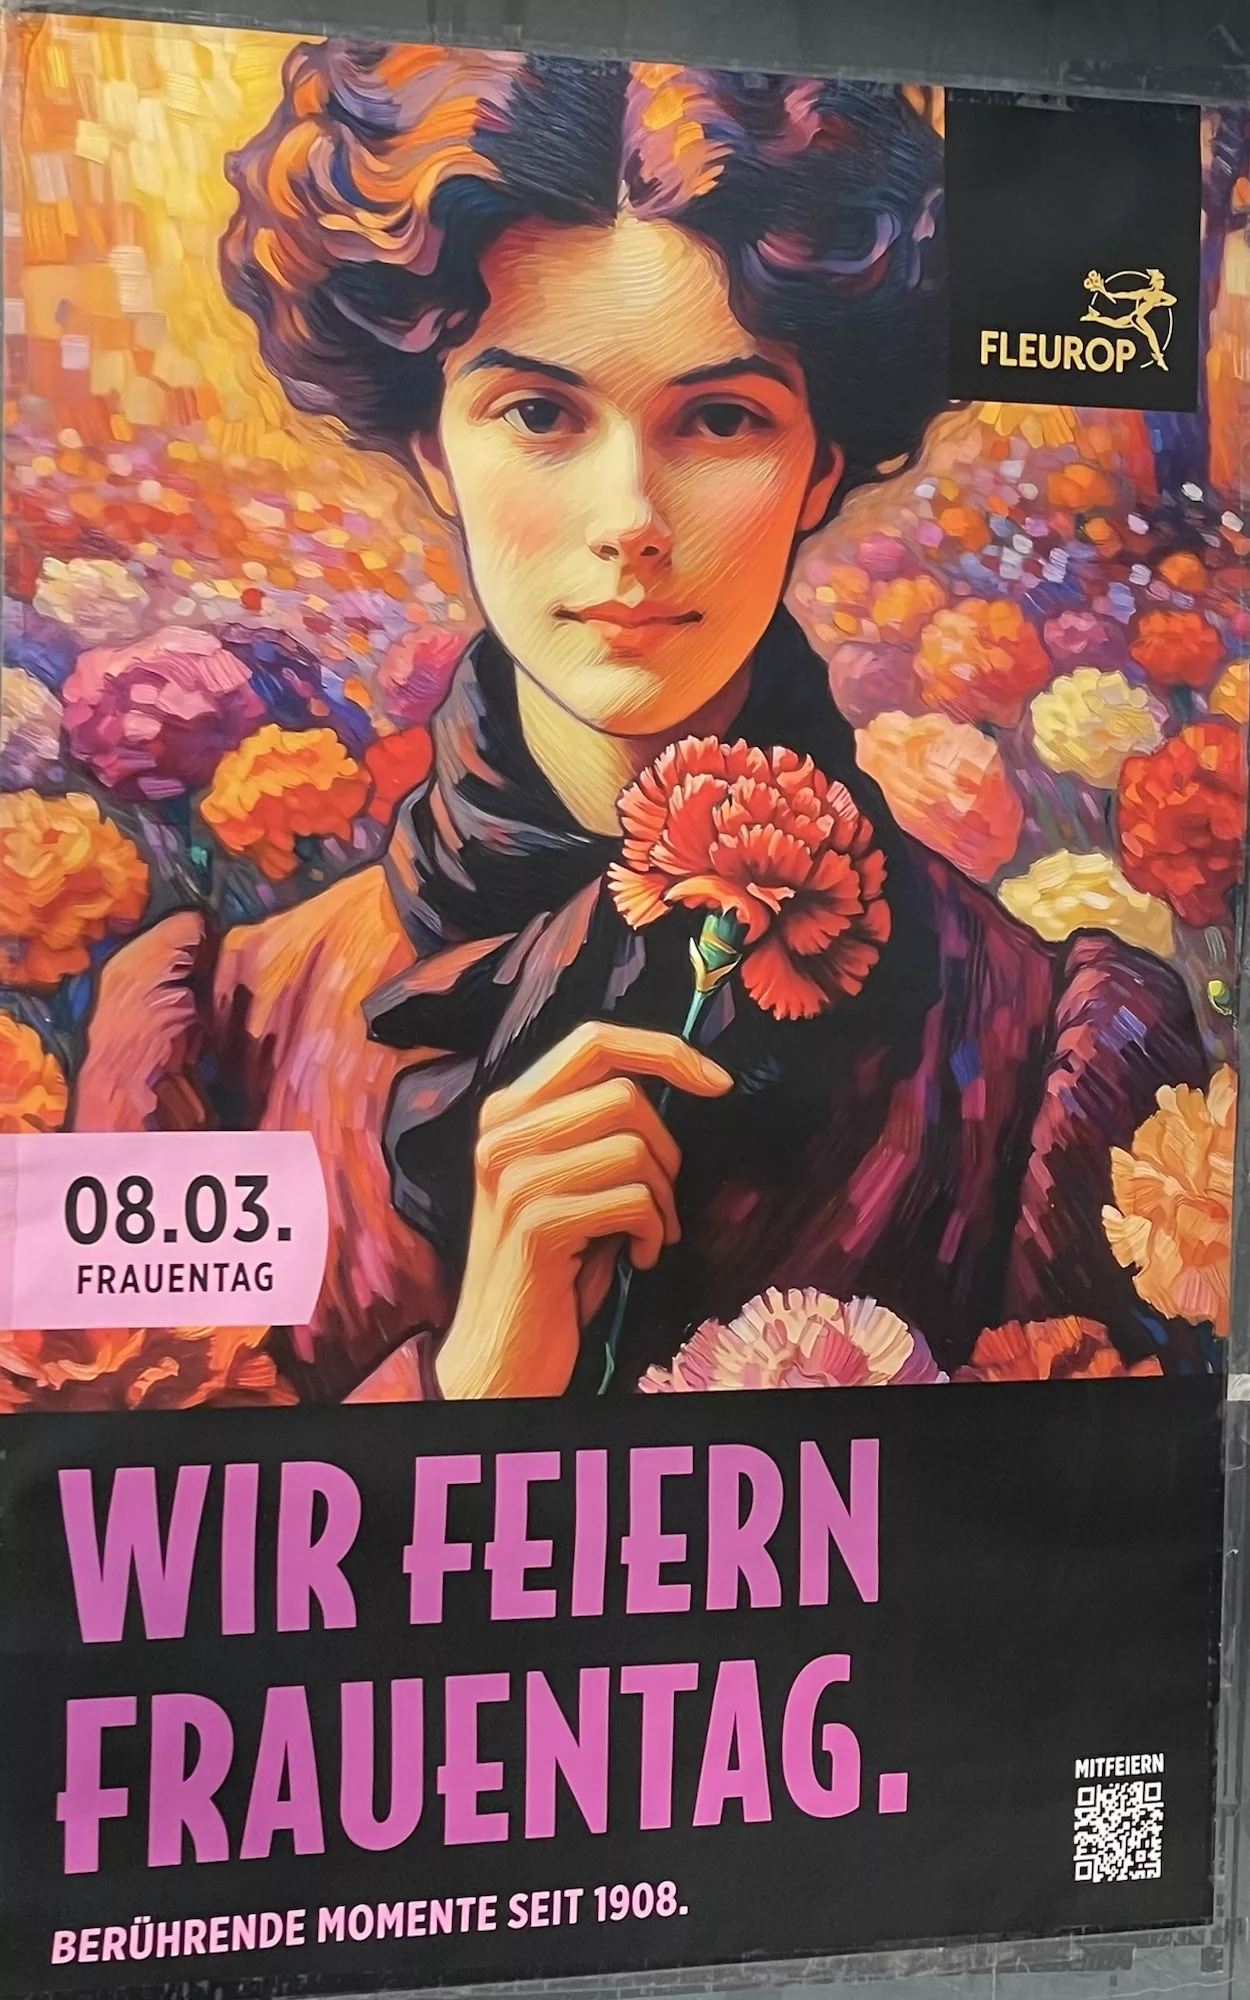 Fleurop-Plakat zum heutigen Weltfrauentag.